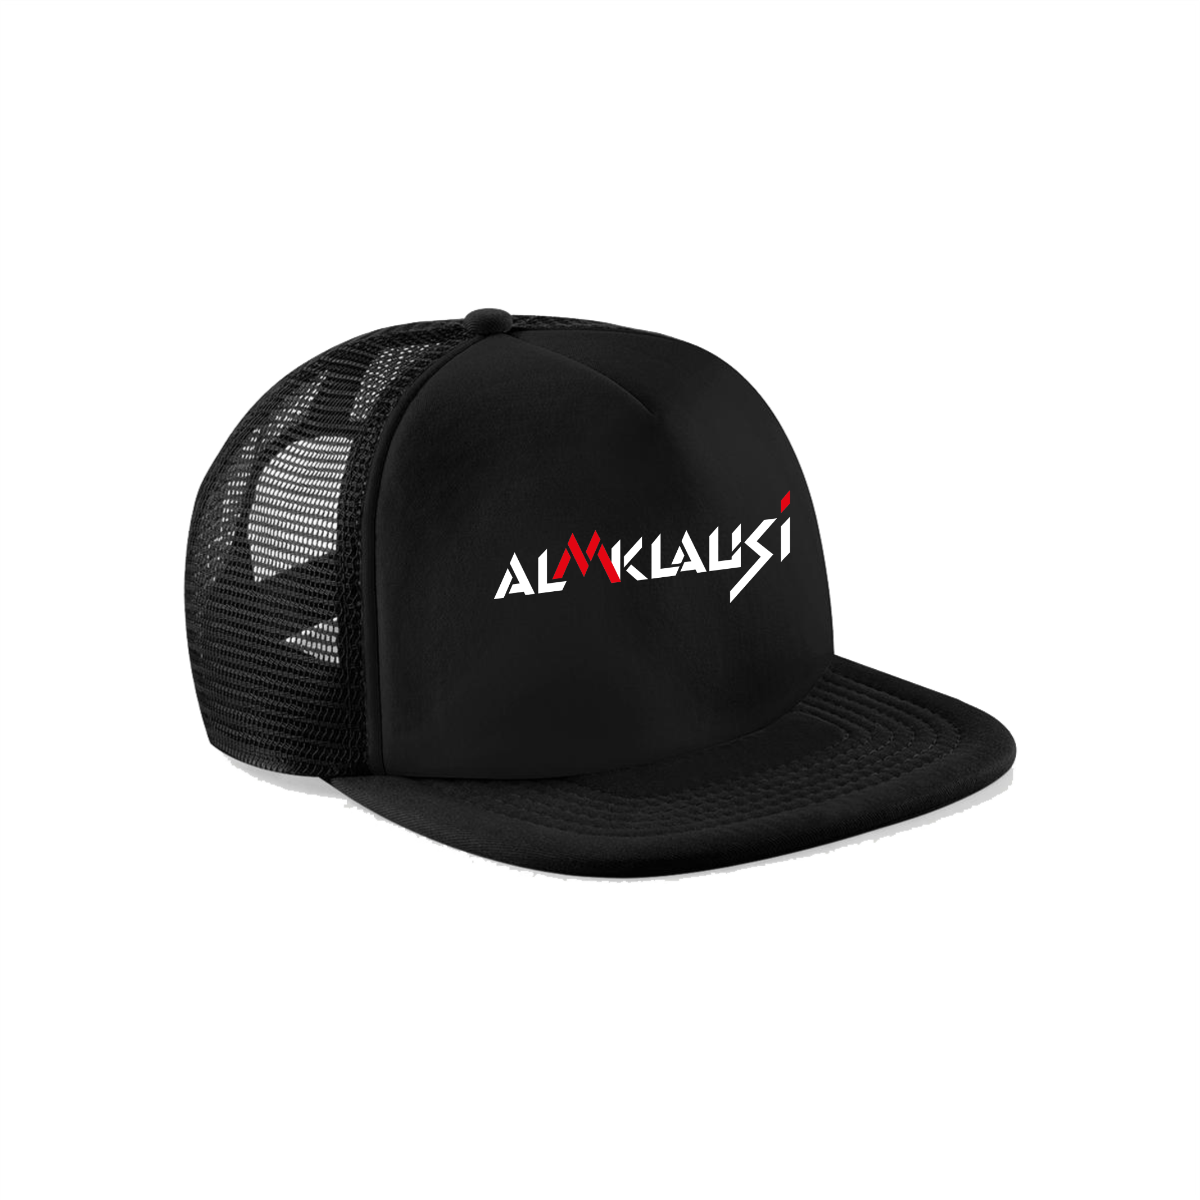 Cap "ALMKLAUSI Logo"